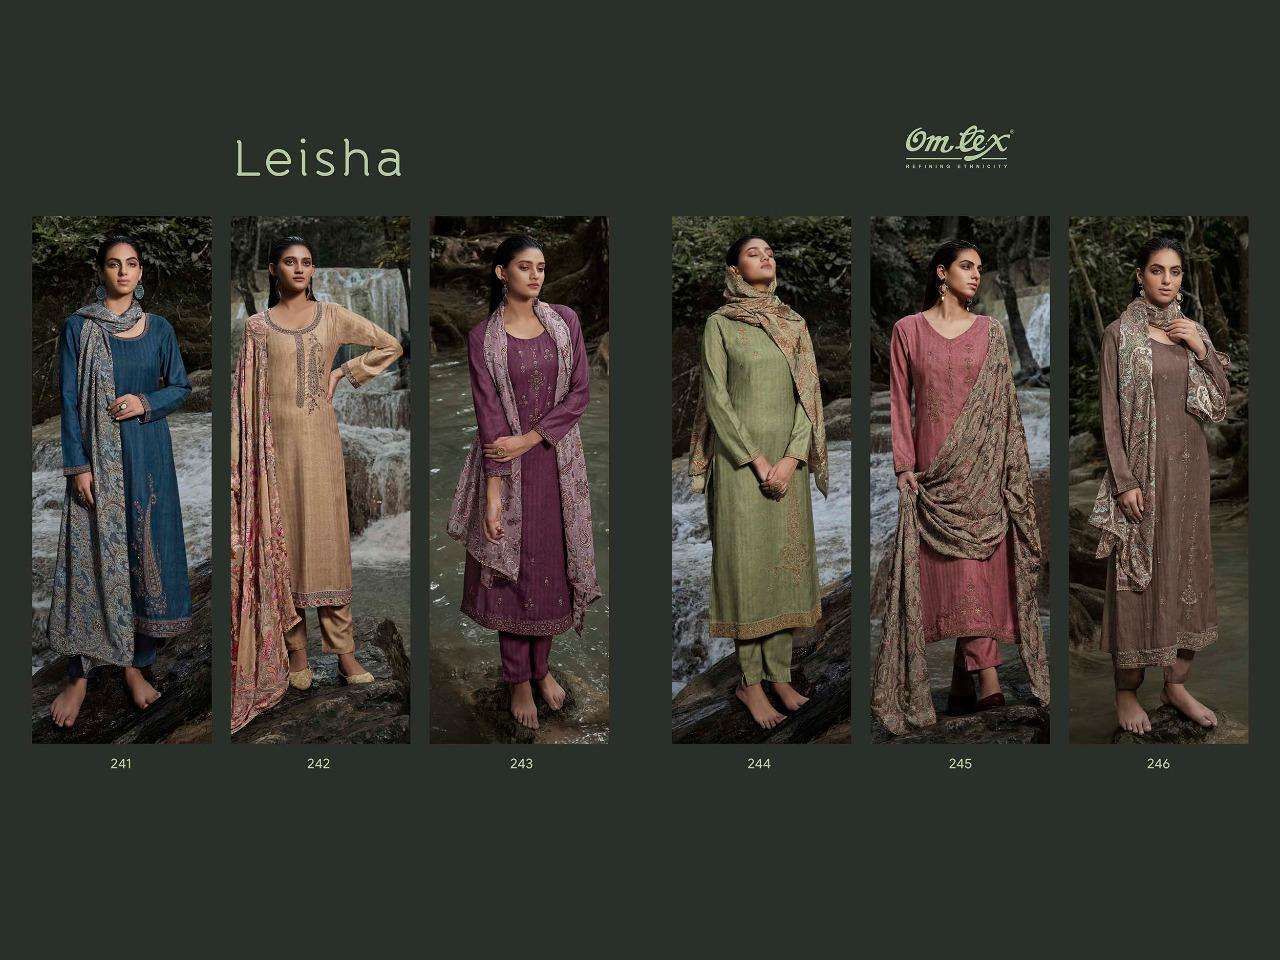 om tex by leisha 241-246 series pashmina digital printed salwar kameez online wholesaler surat 